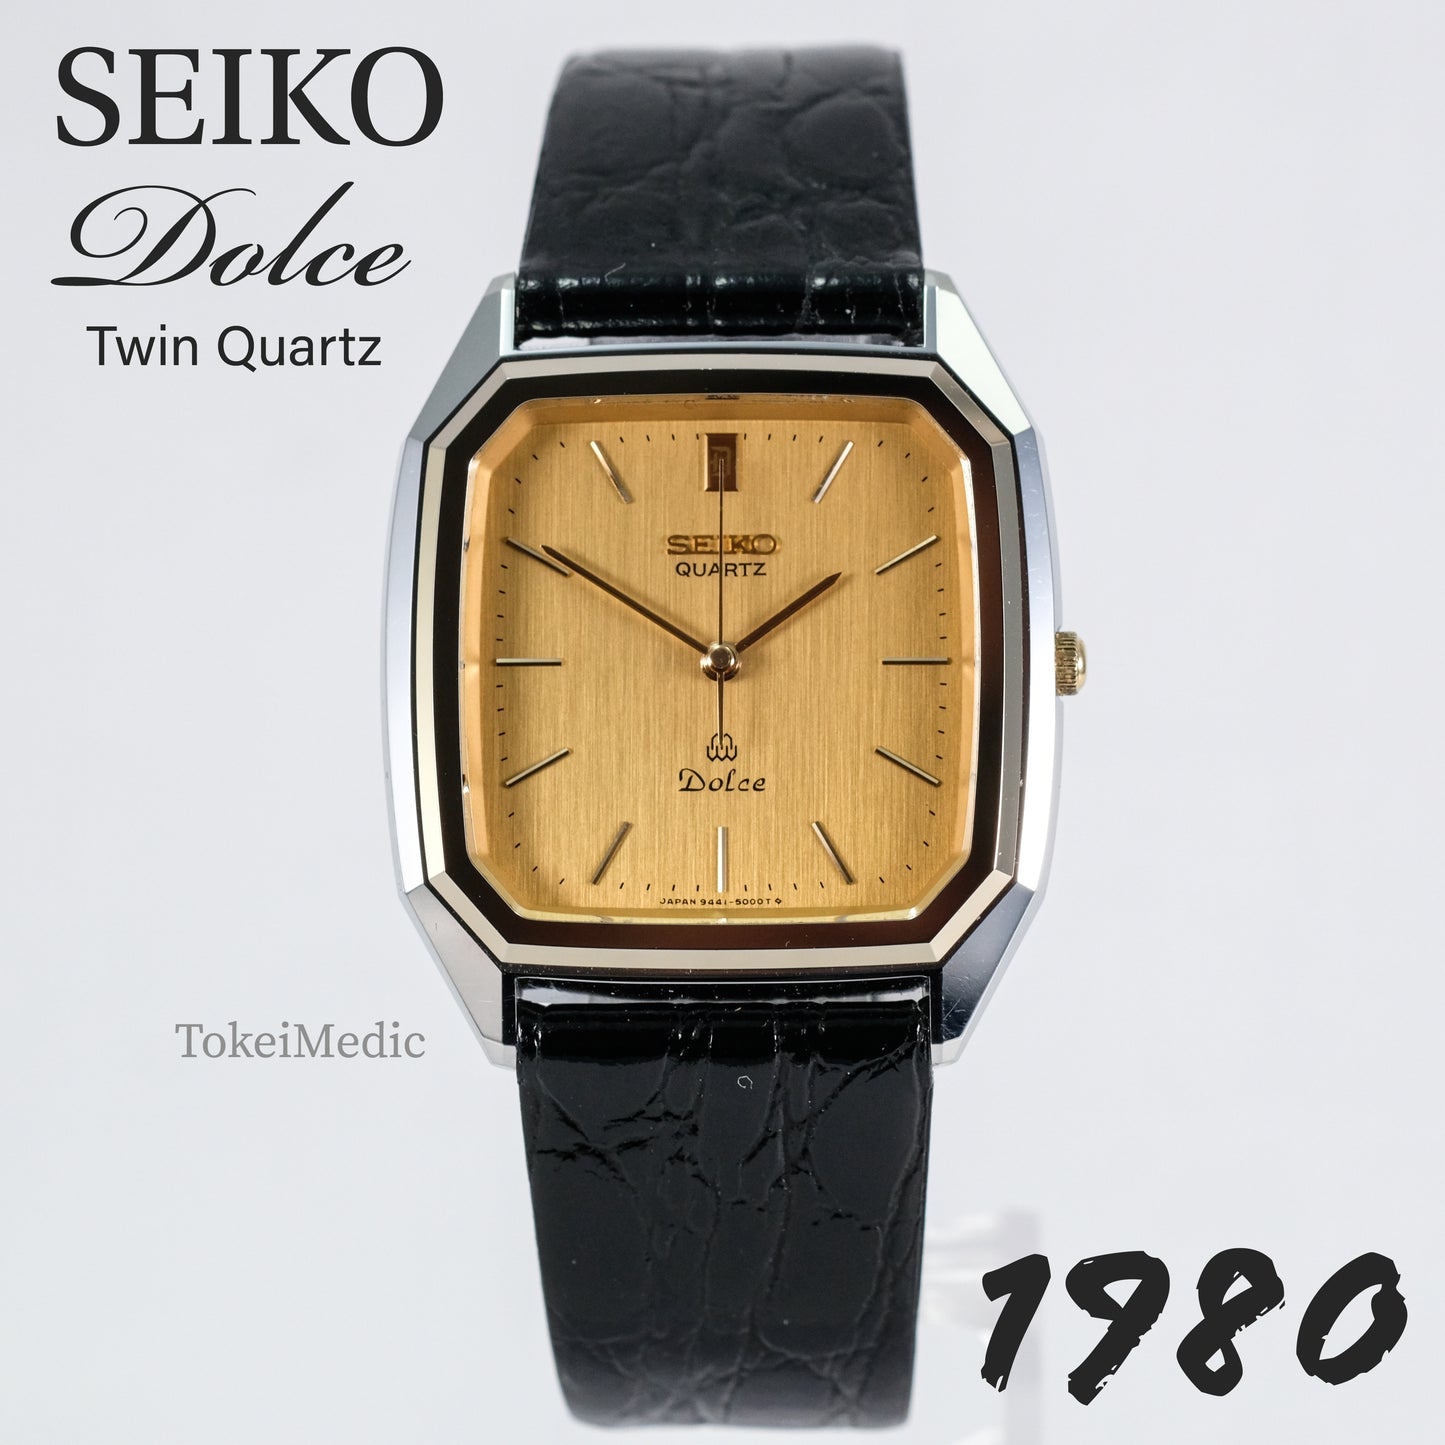 1980 Seiko Dolce Twin Quartz 9441-5000